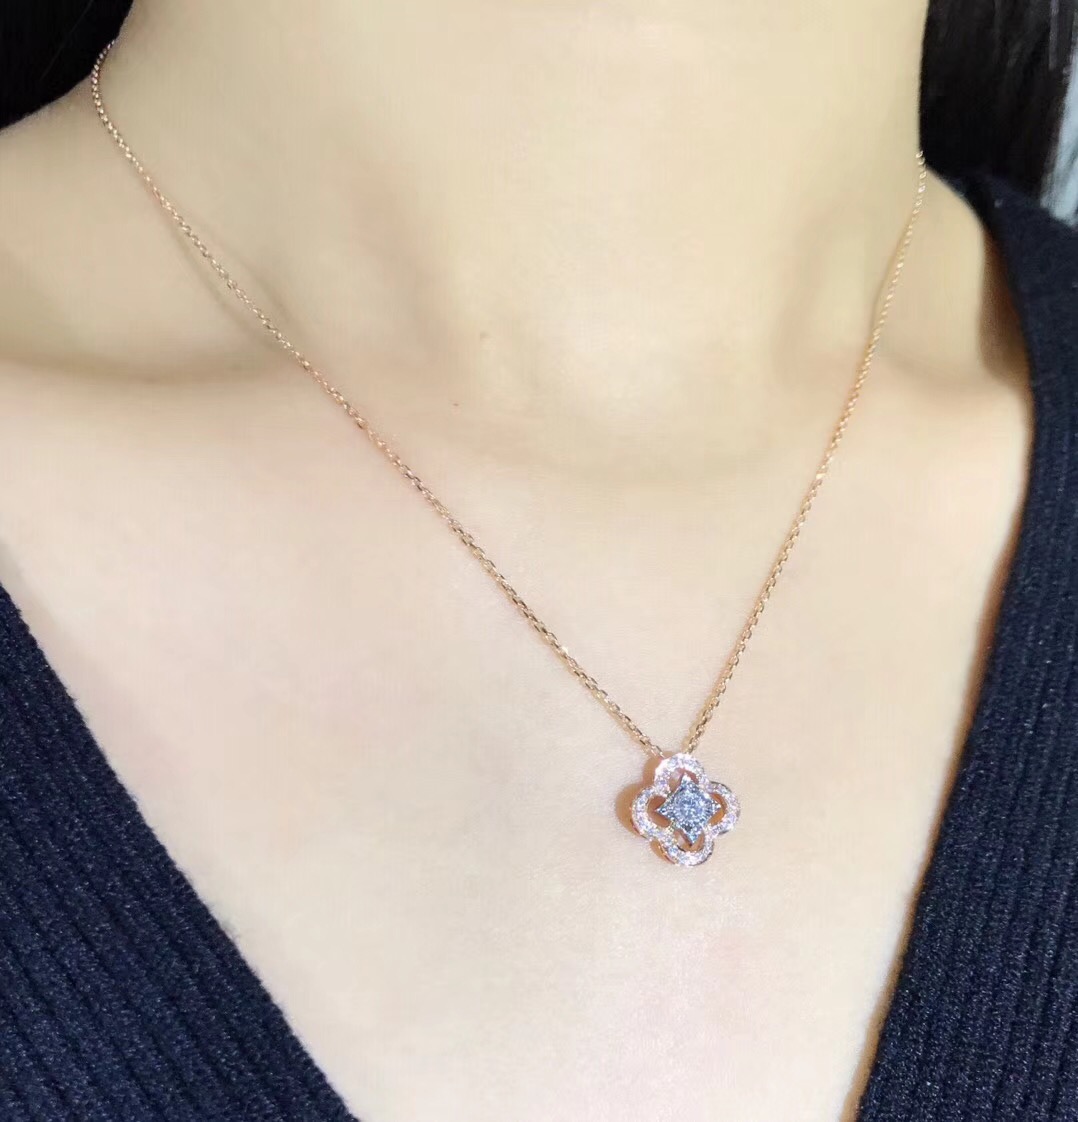 N00386 Four-leaf Clover Diamond Necklace in 18k White Gold/18k Gold